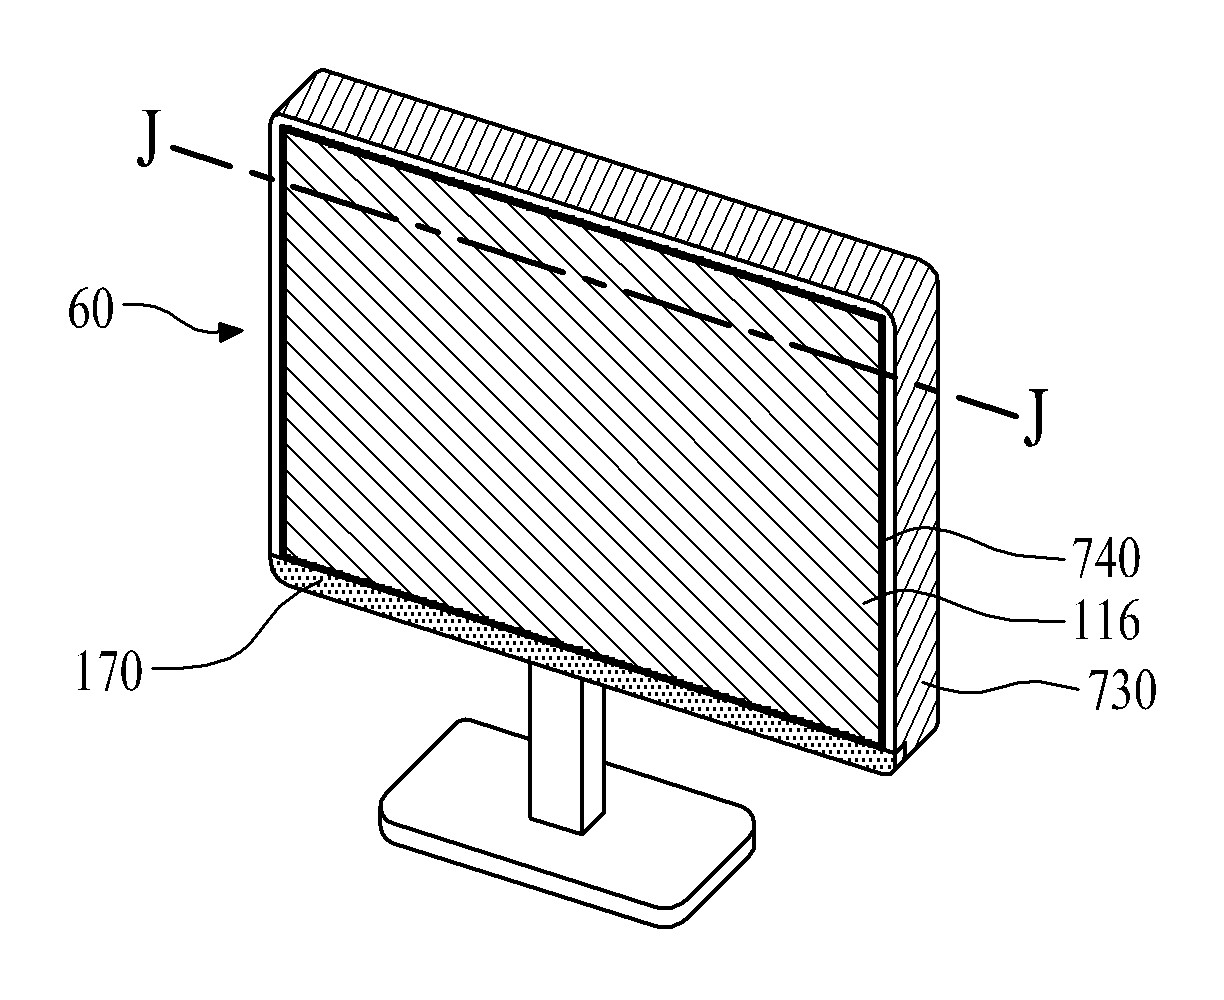 Display Apparatus